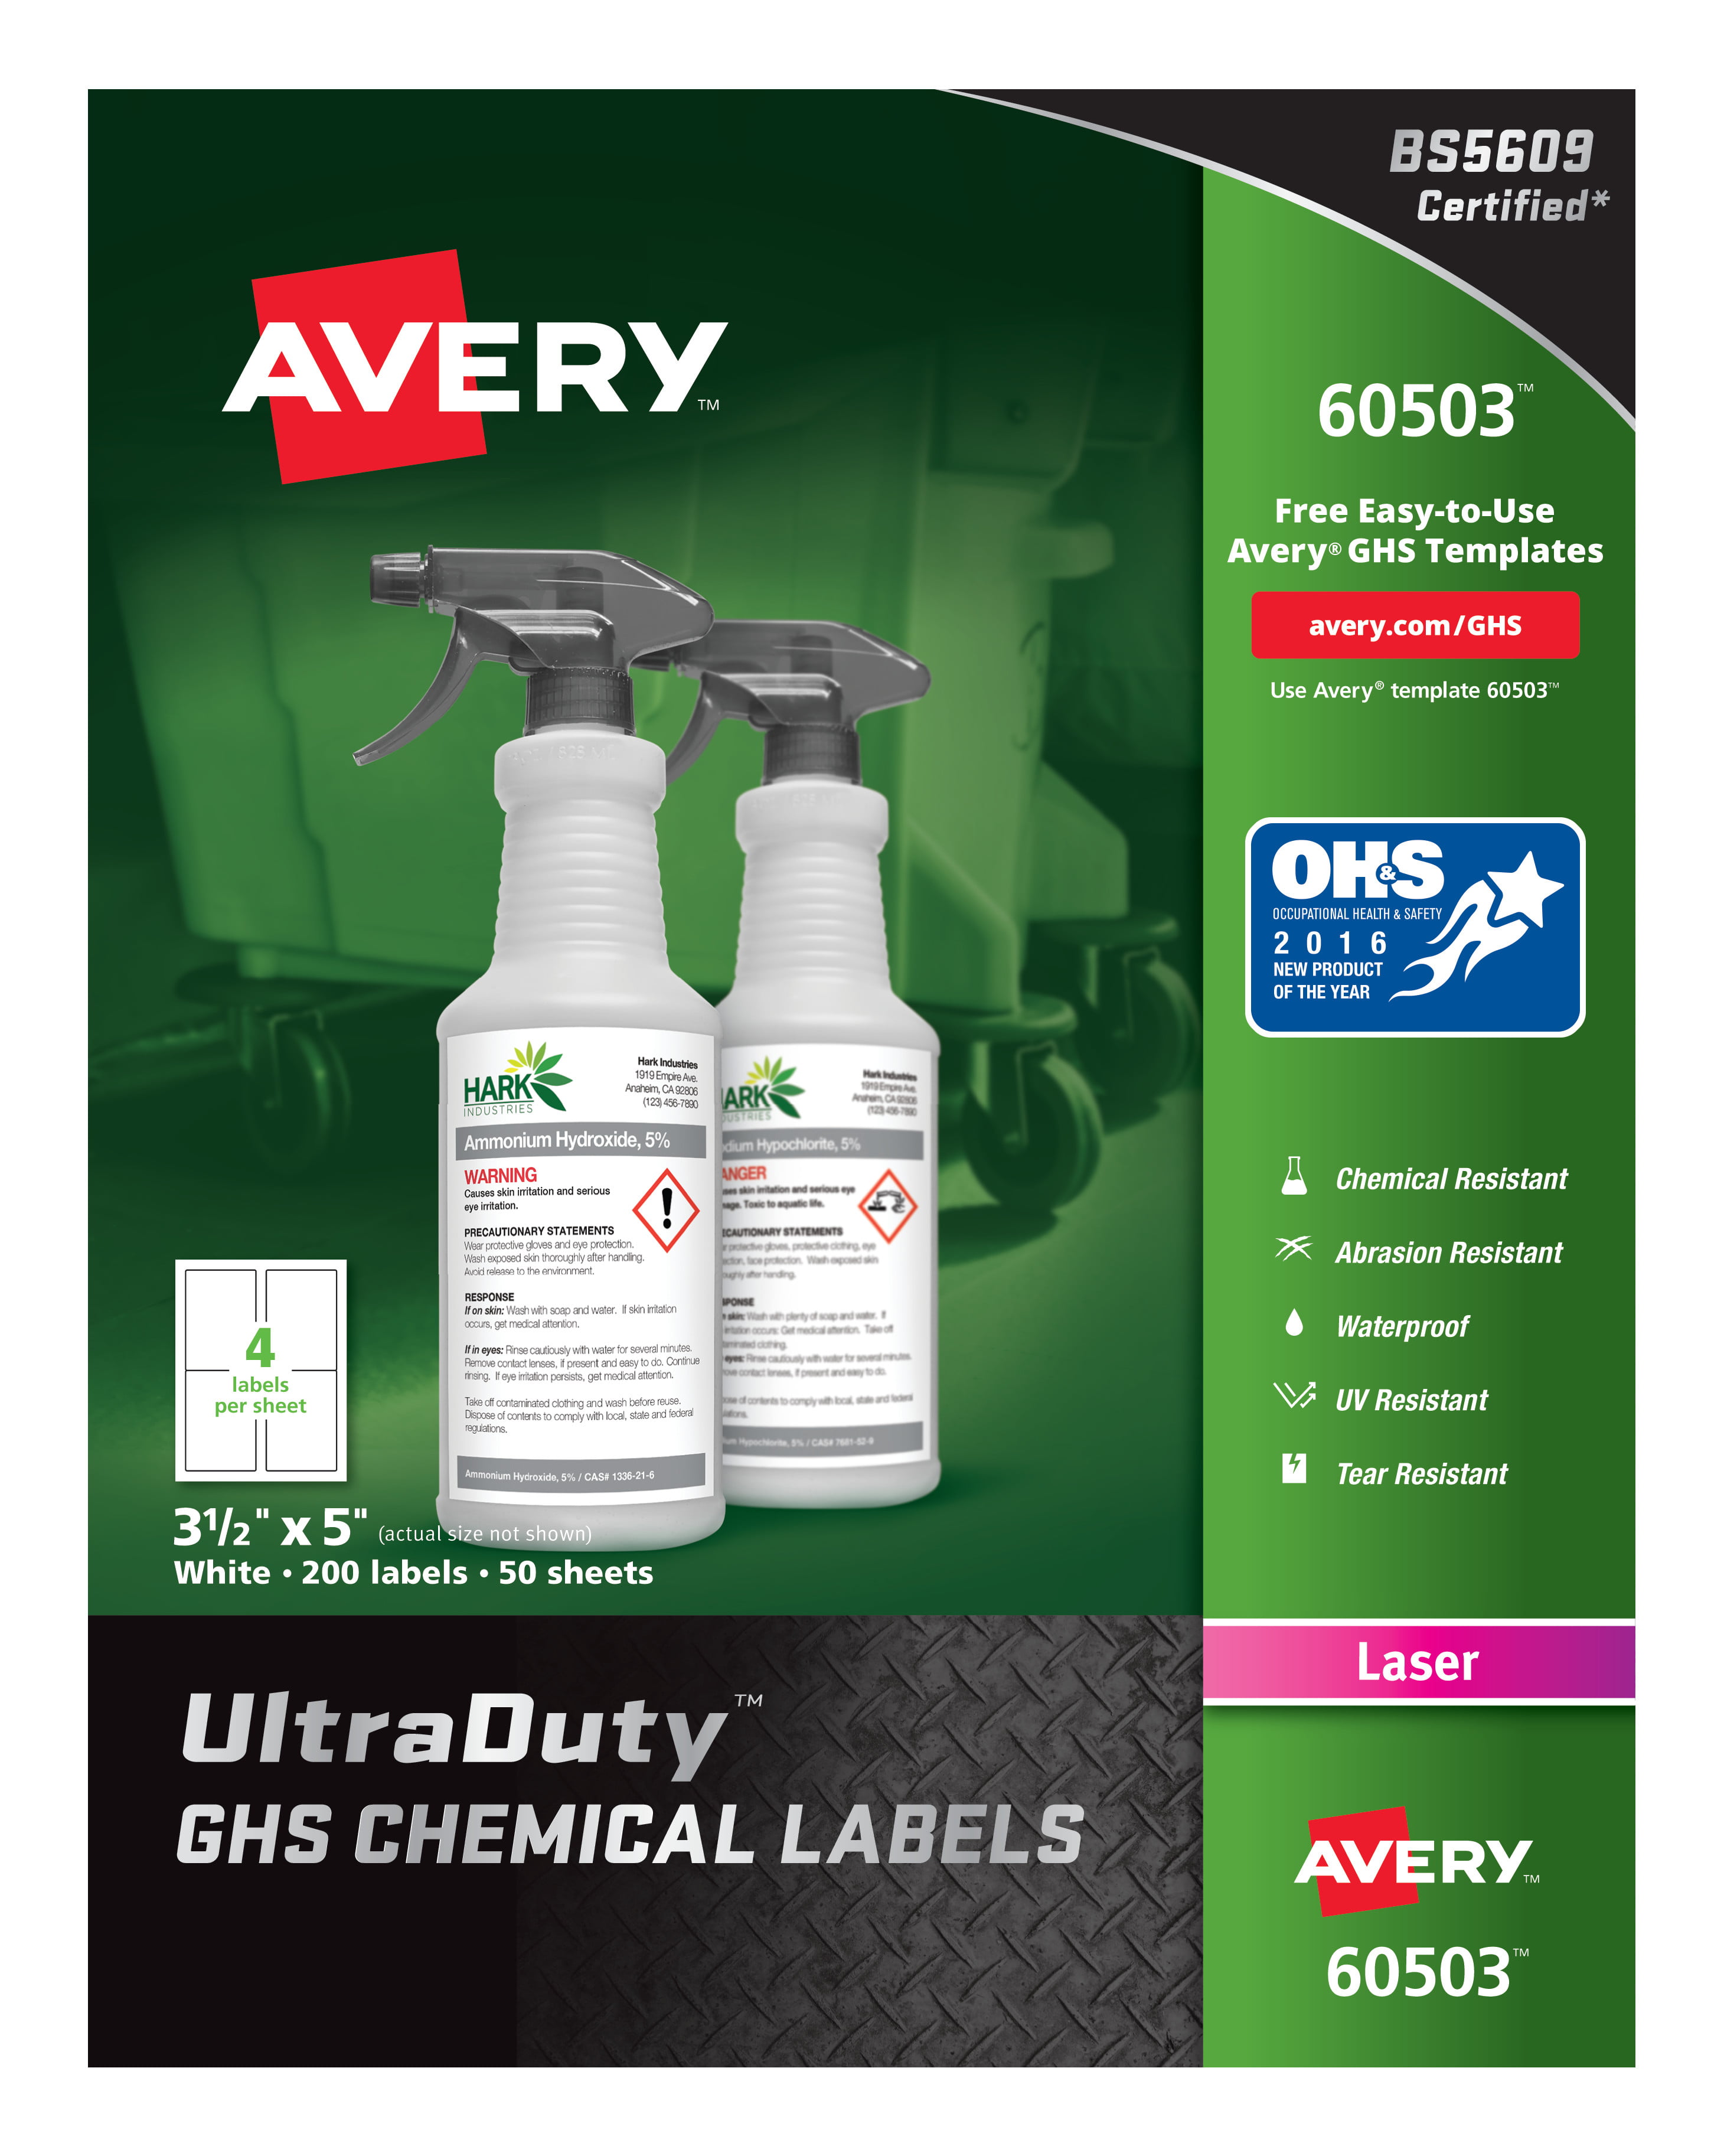 avery-ultraduty-ghs-chemical-labels-for-laser-printers-waterproof-uv